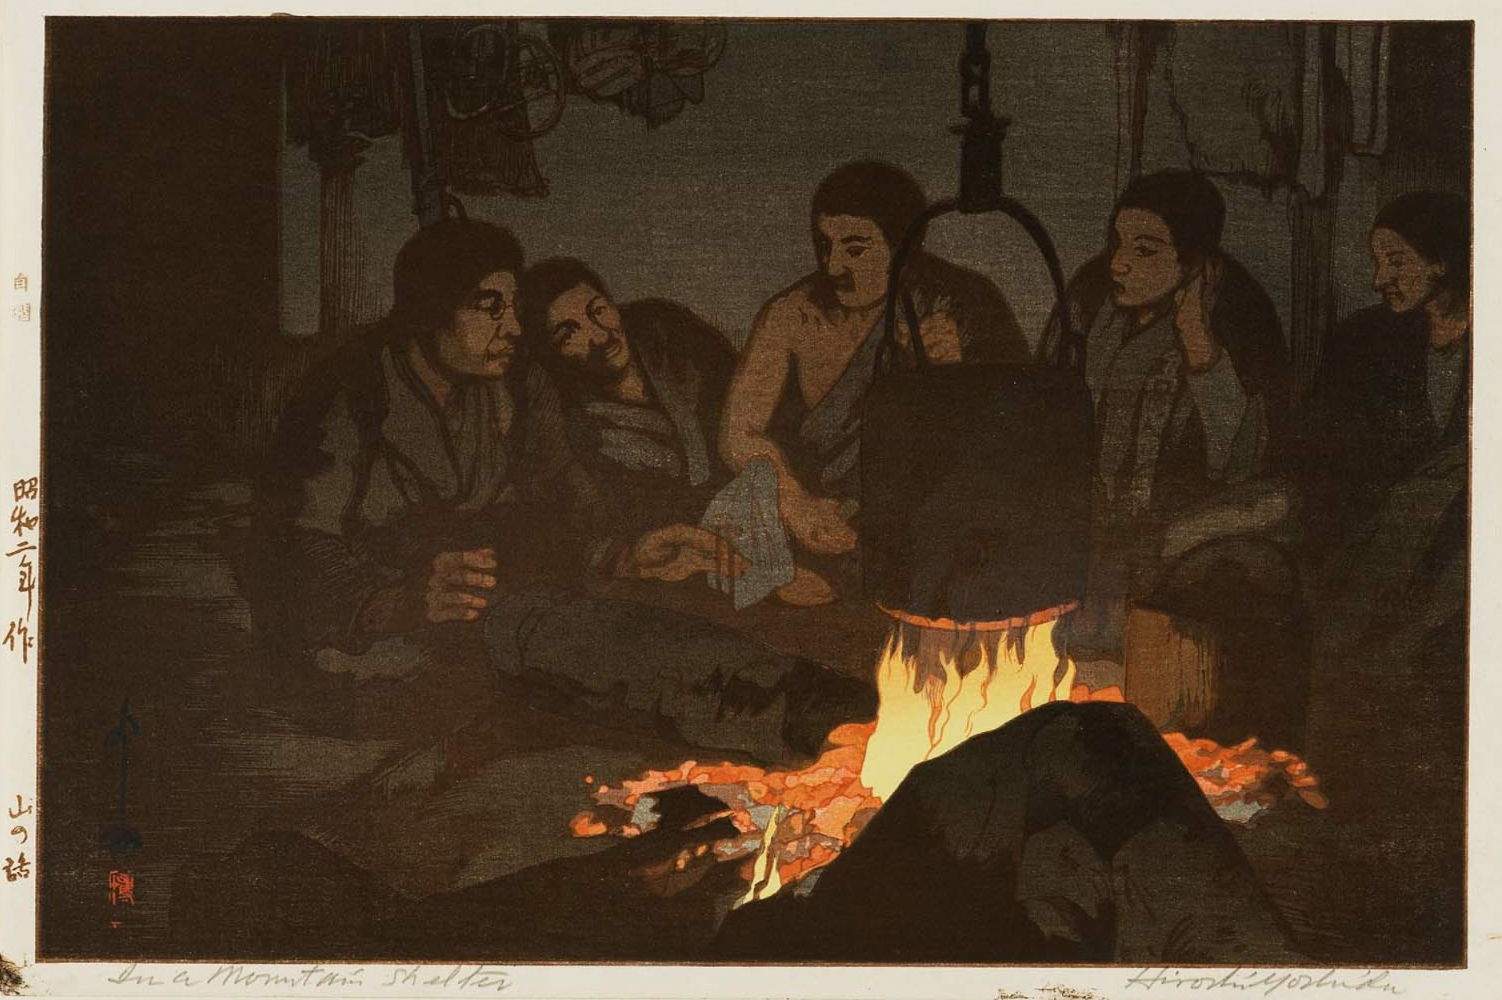 Hiroshi Yoshida “In a Mountain Shelter” 1927 woodblock print